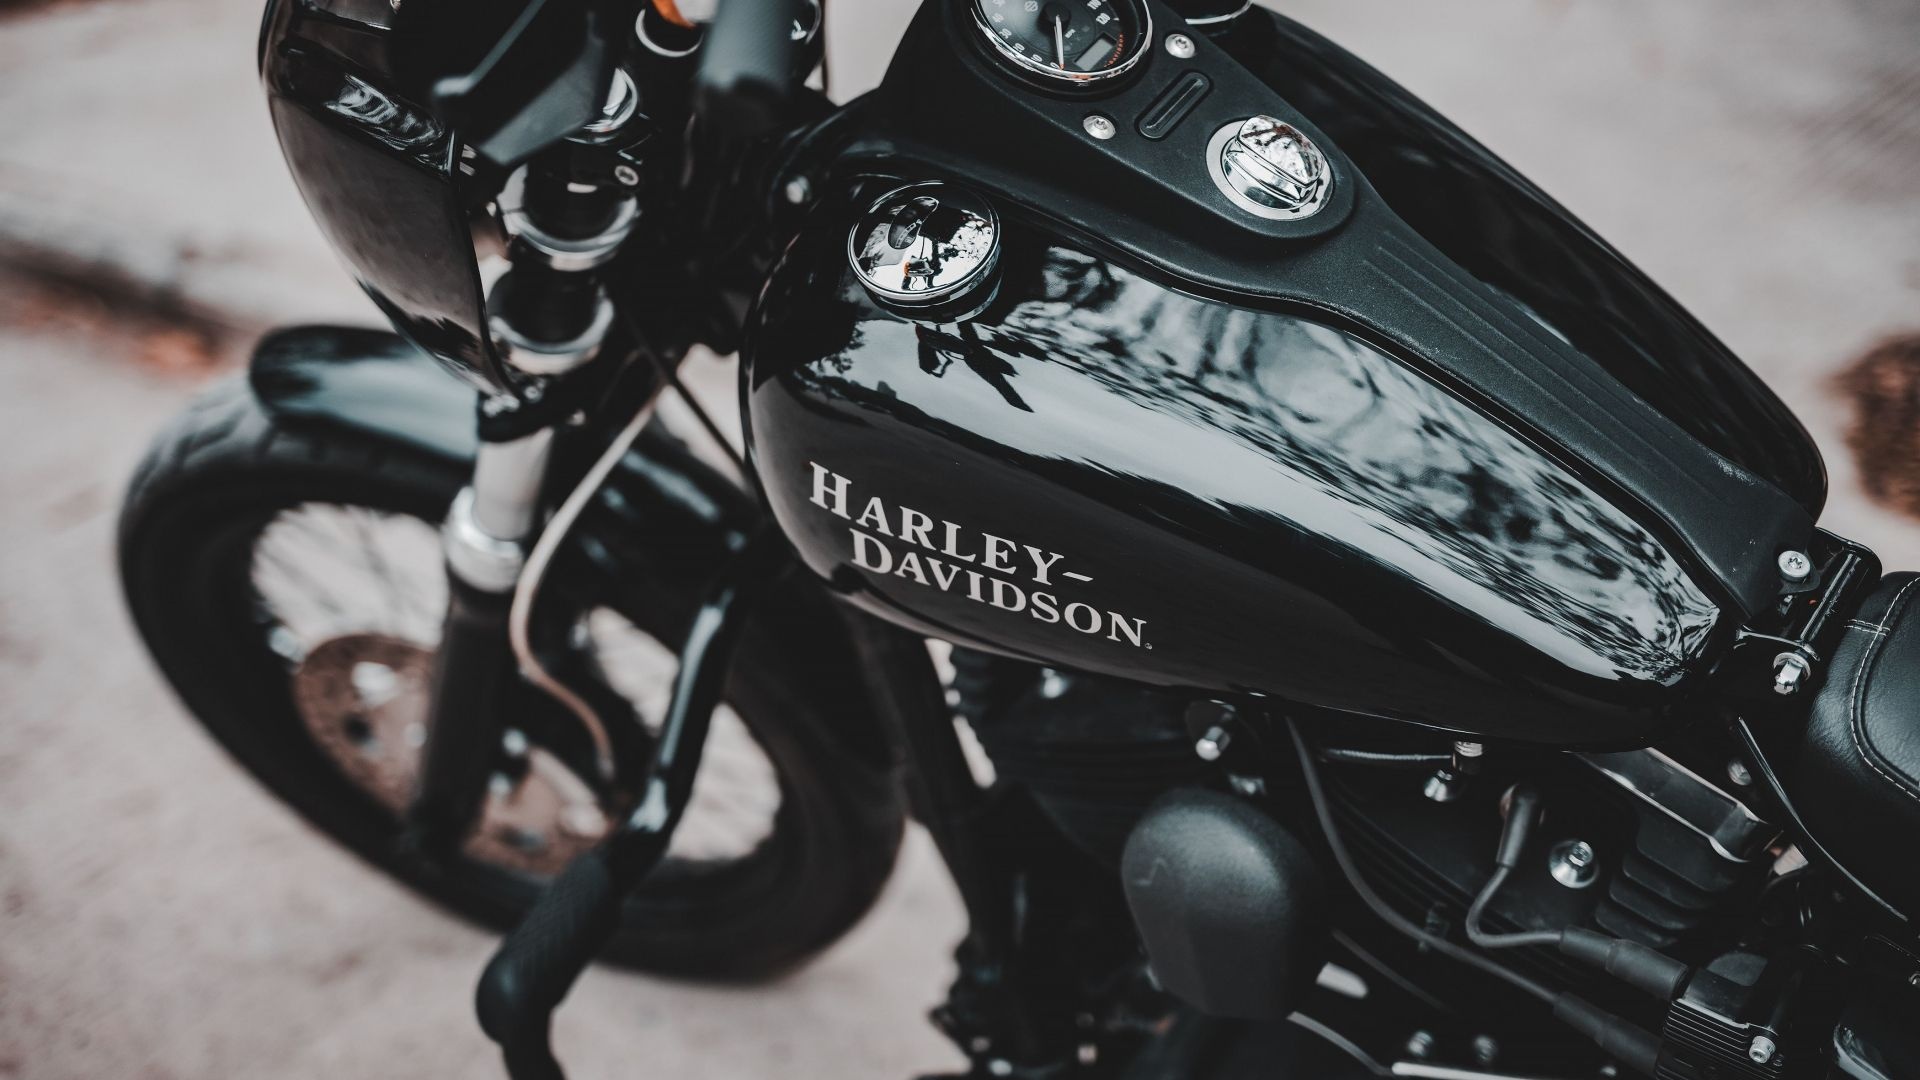 Harley-Davidson Wallpapers : Top Free Harley-Davidson Backgrounds, Pictures \u0026 Images Download 1920x1080